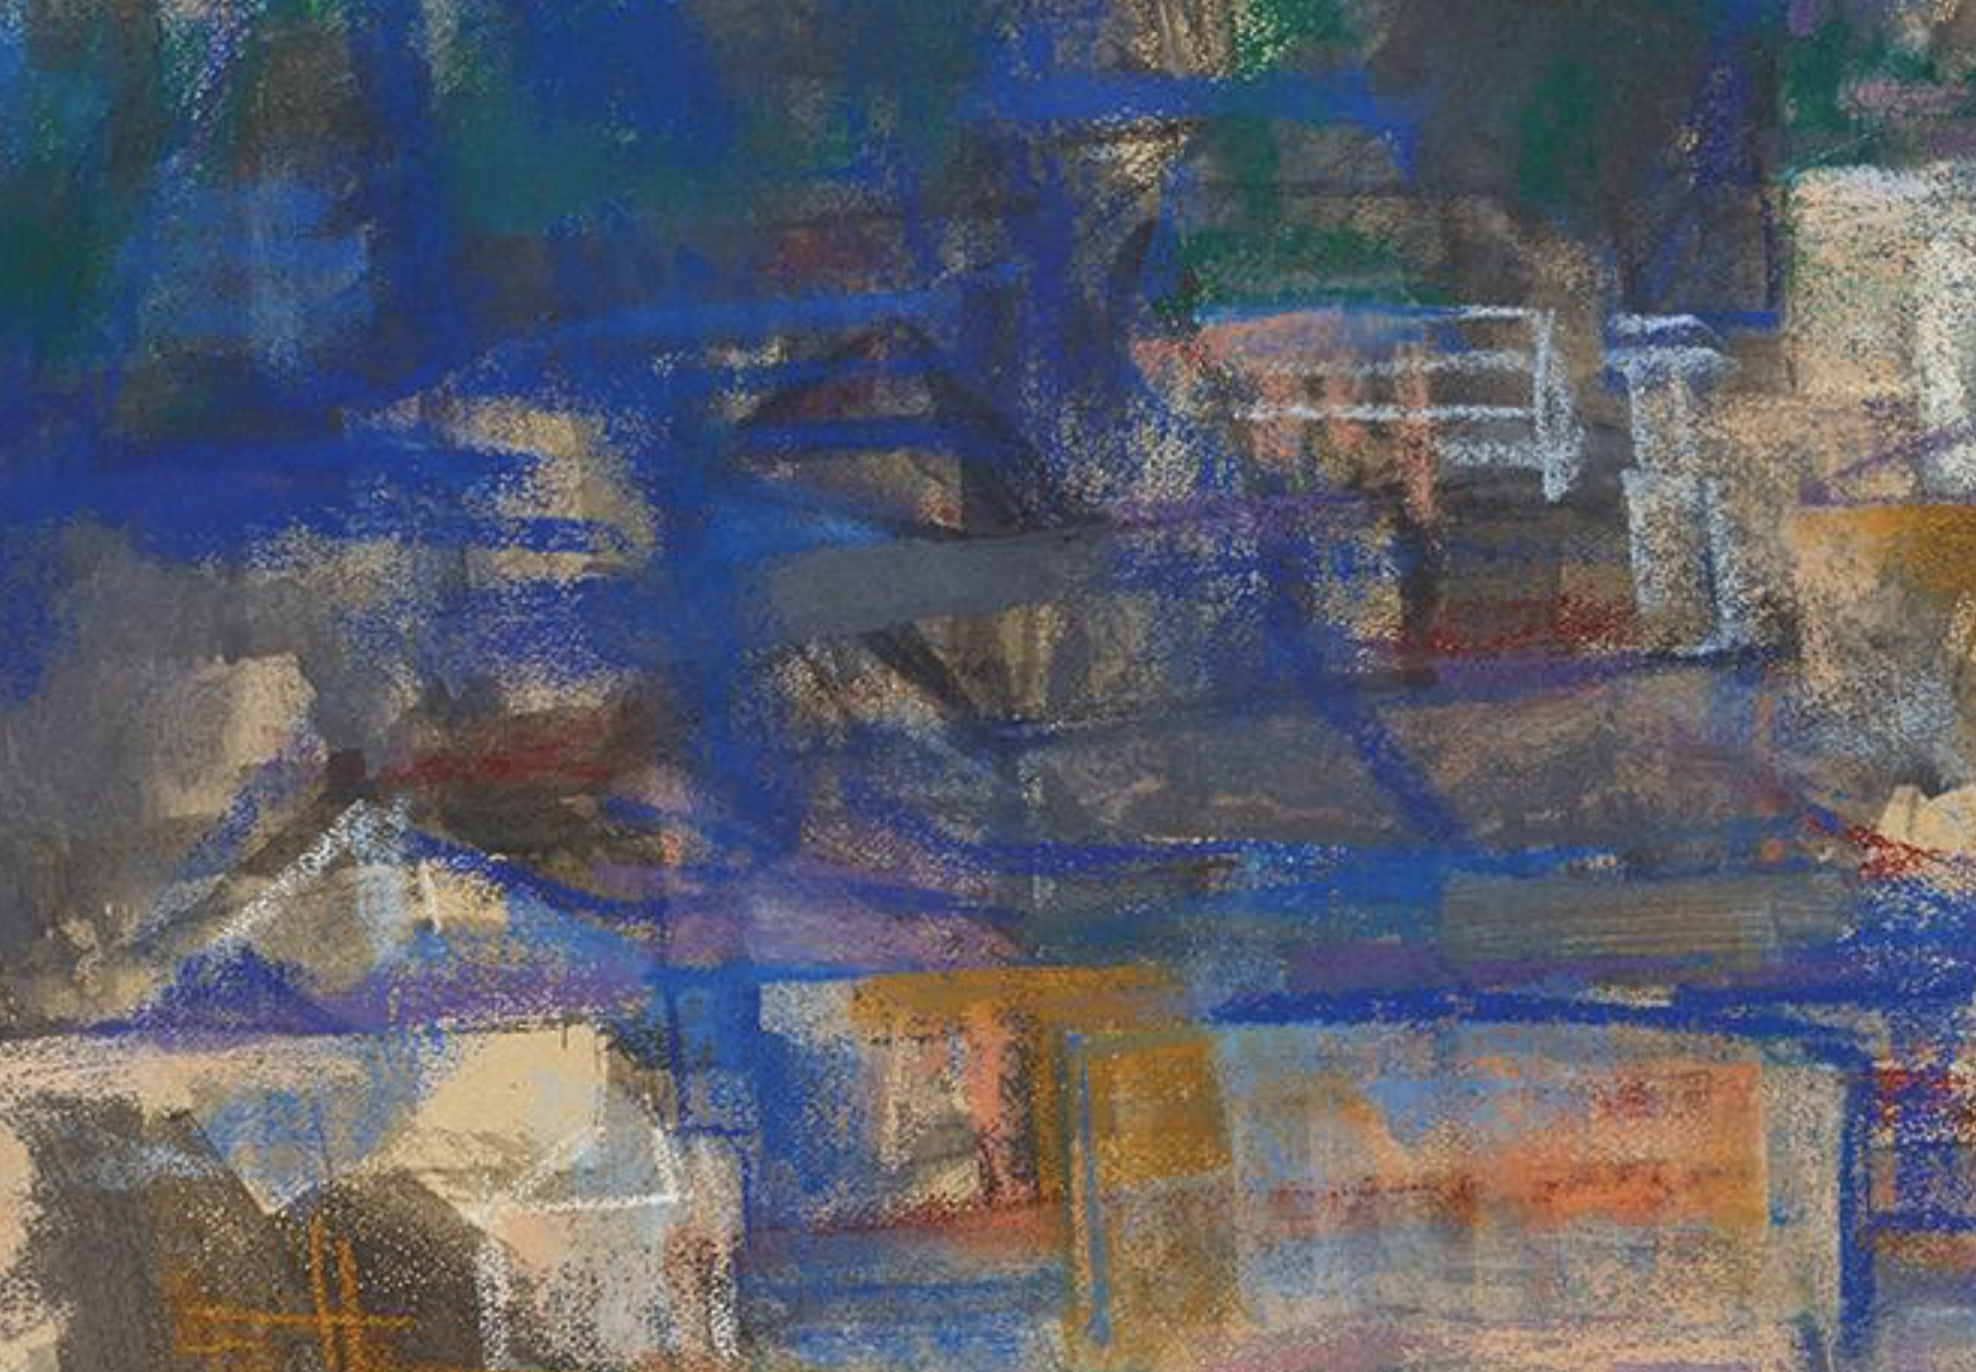 Gerhart Frankl, Salzburg III, 1962, charcoal, pastel, and gouache on paper, 48 x 63.5cm, Belvedere, Vienna, Austria - detail of blue overlay - loosen up